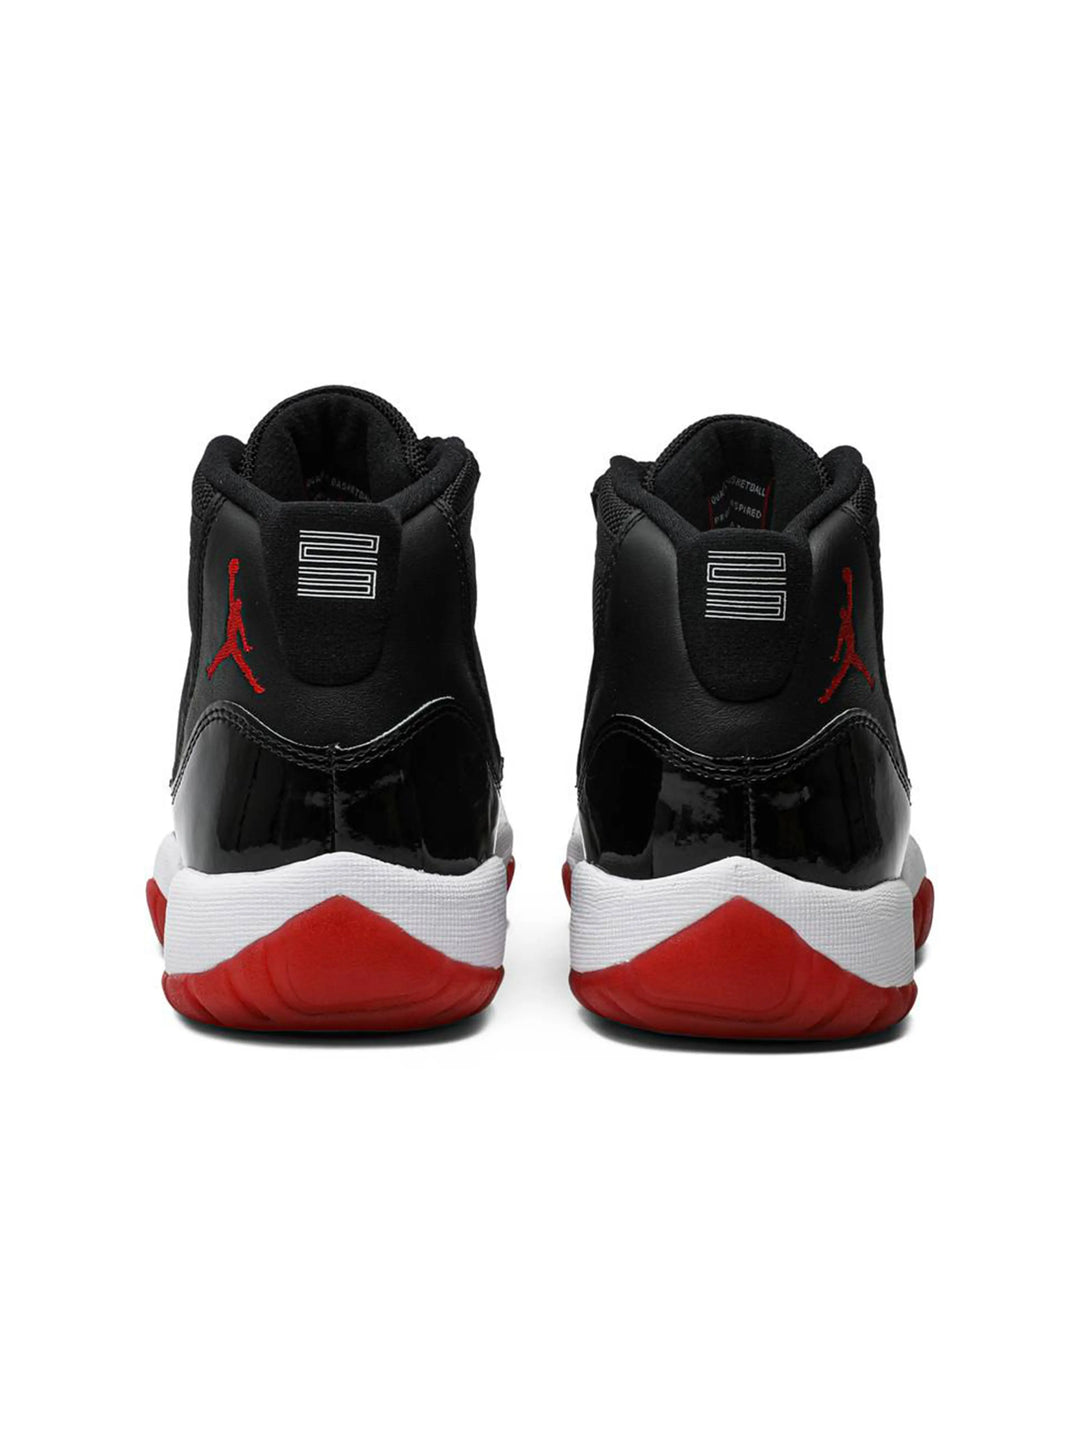 Nike Air Jordan 11 Retro Playoffs Bred [2019] Jordan Brand